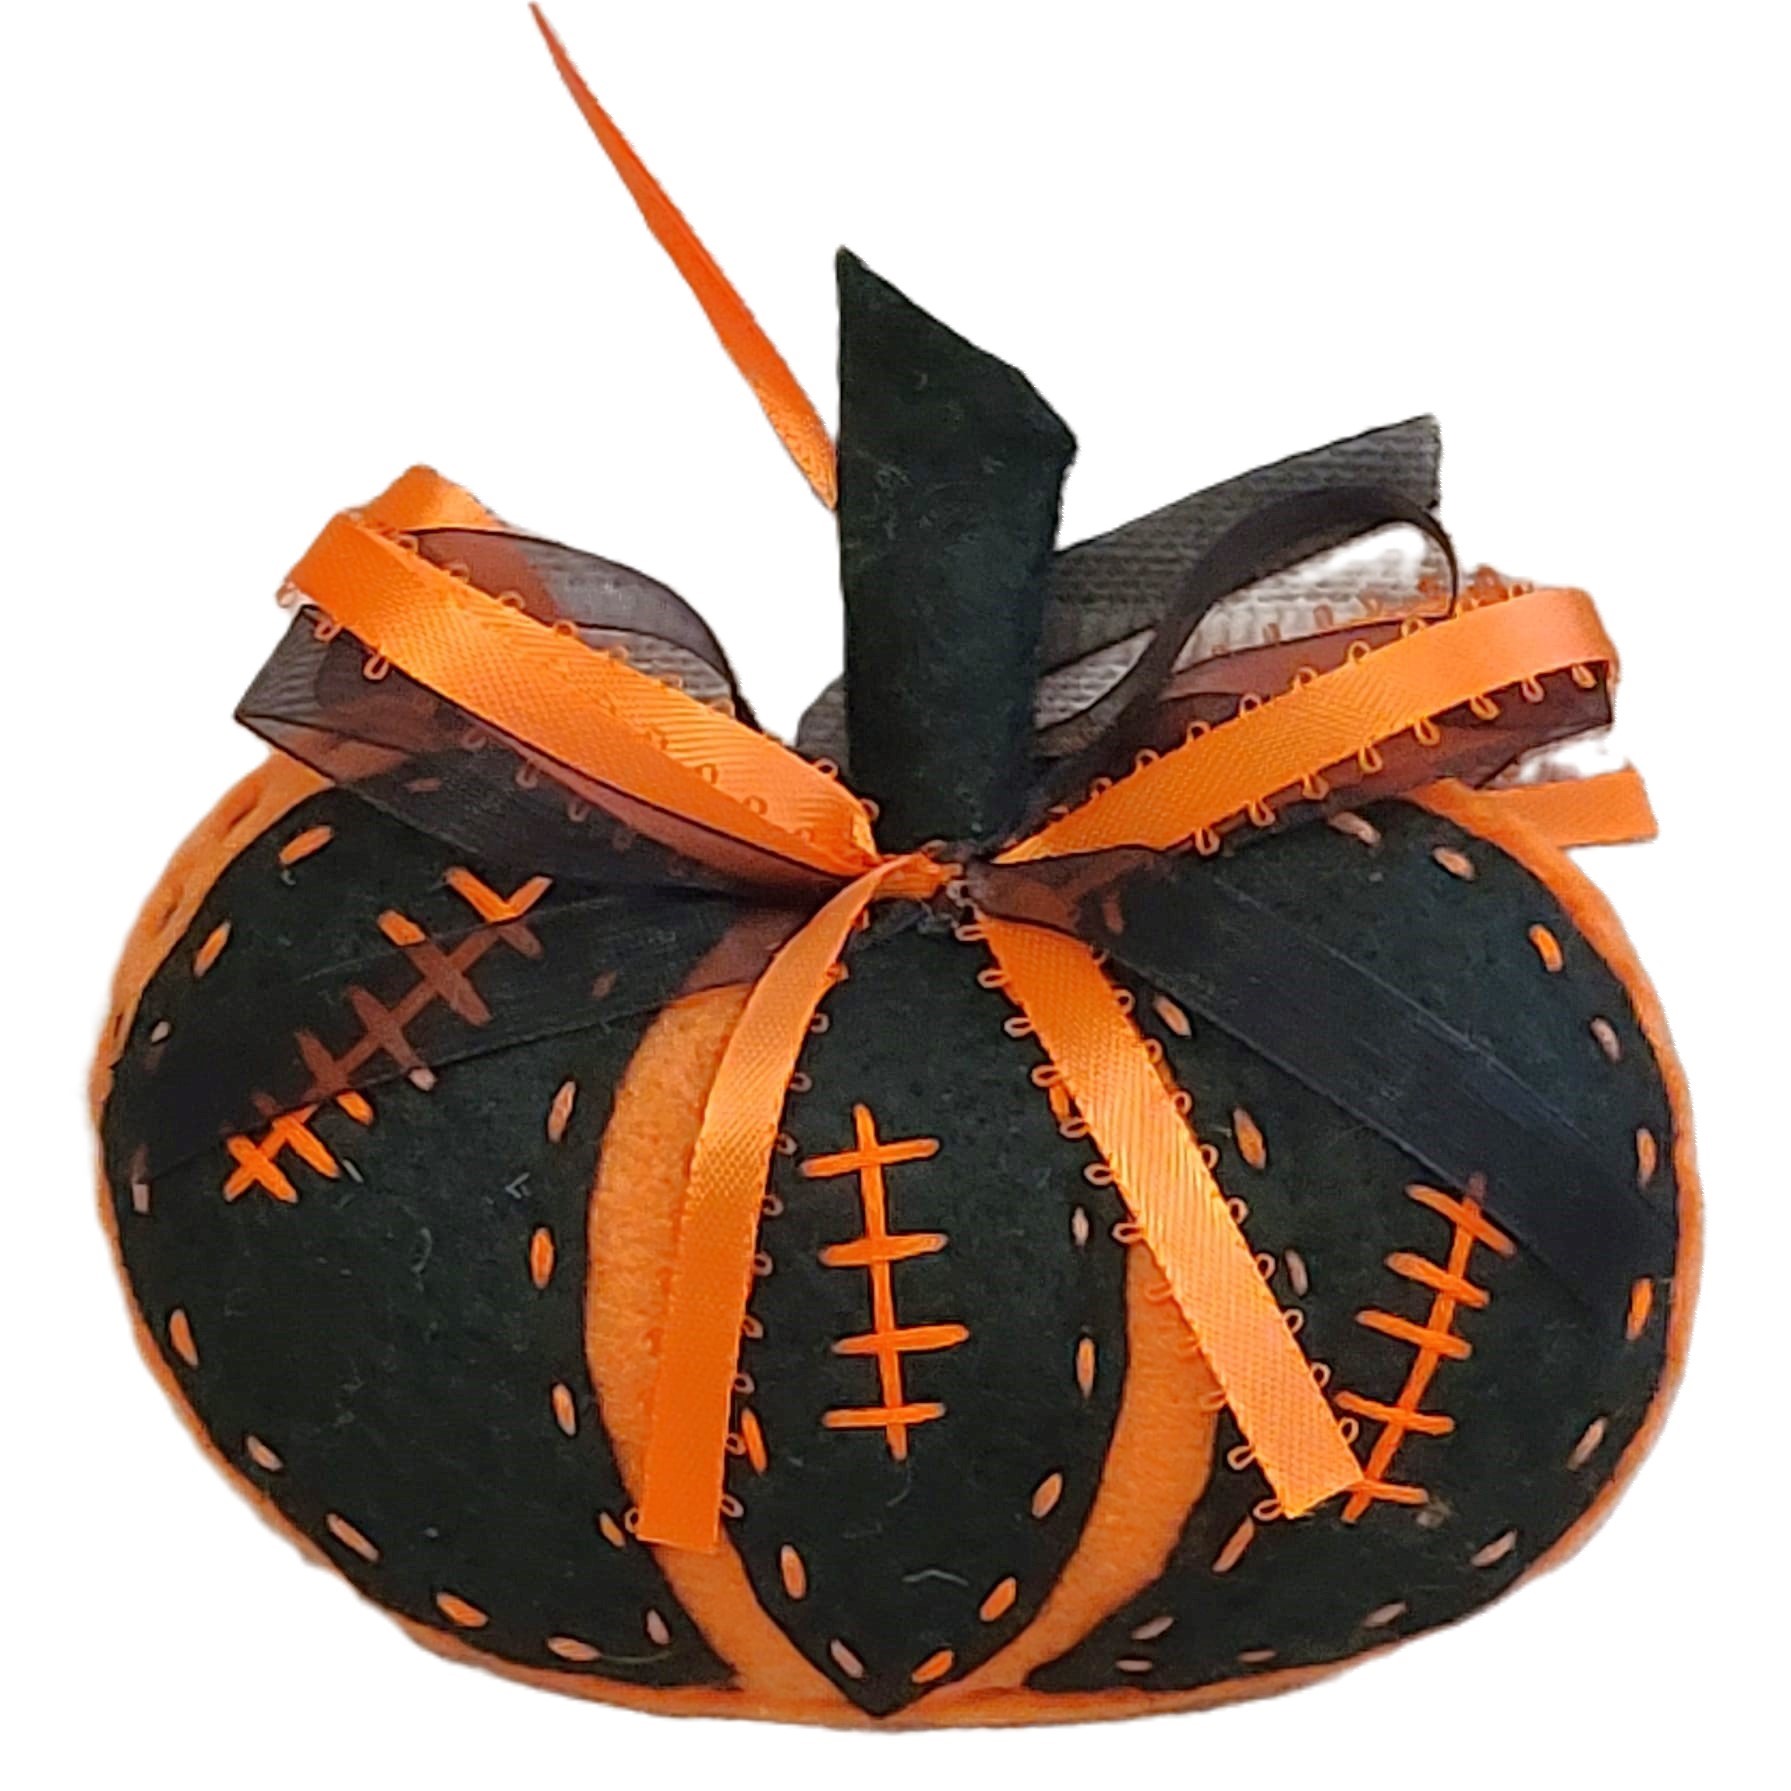 Felt pumpkin ornament - orange with black